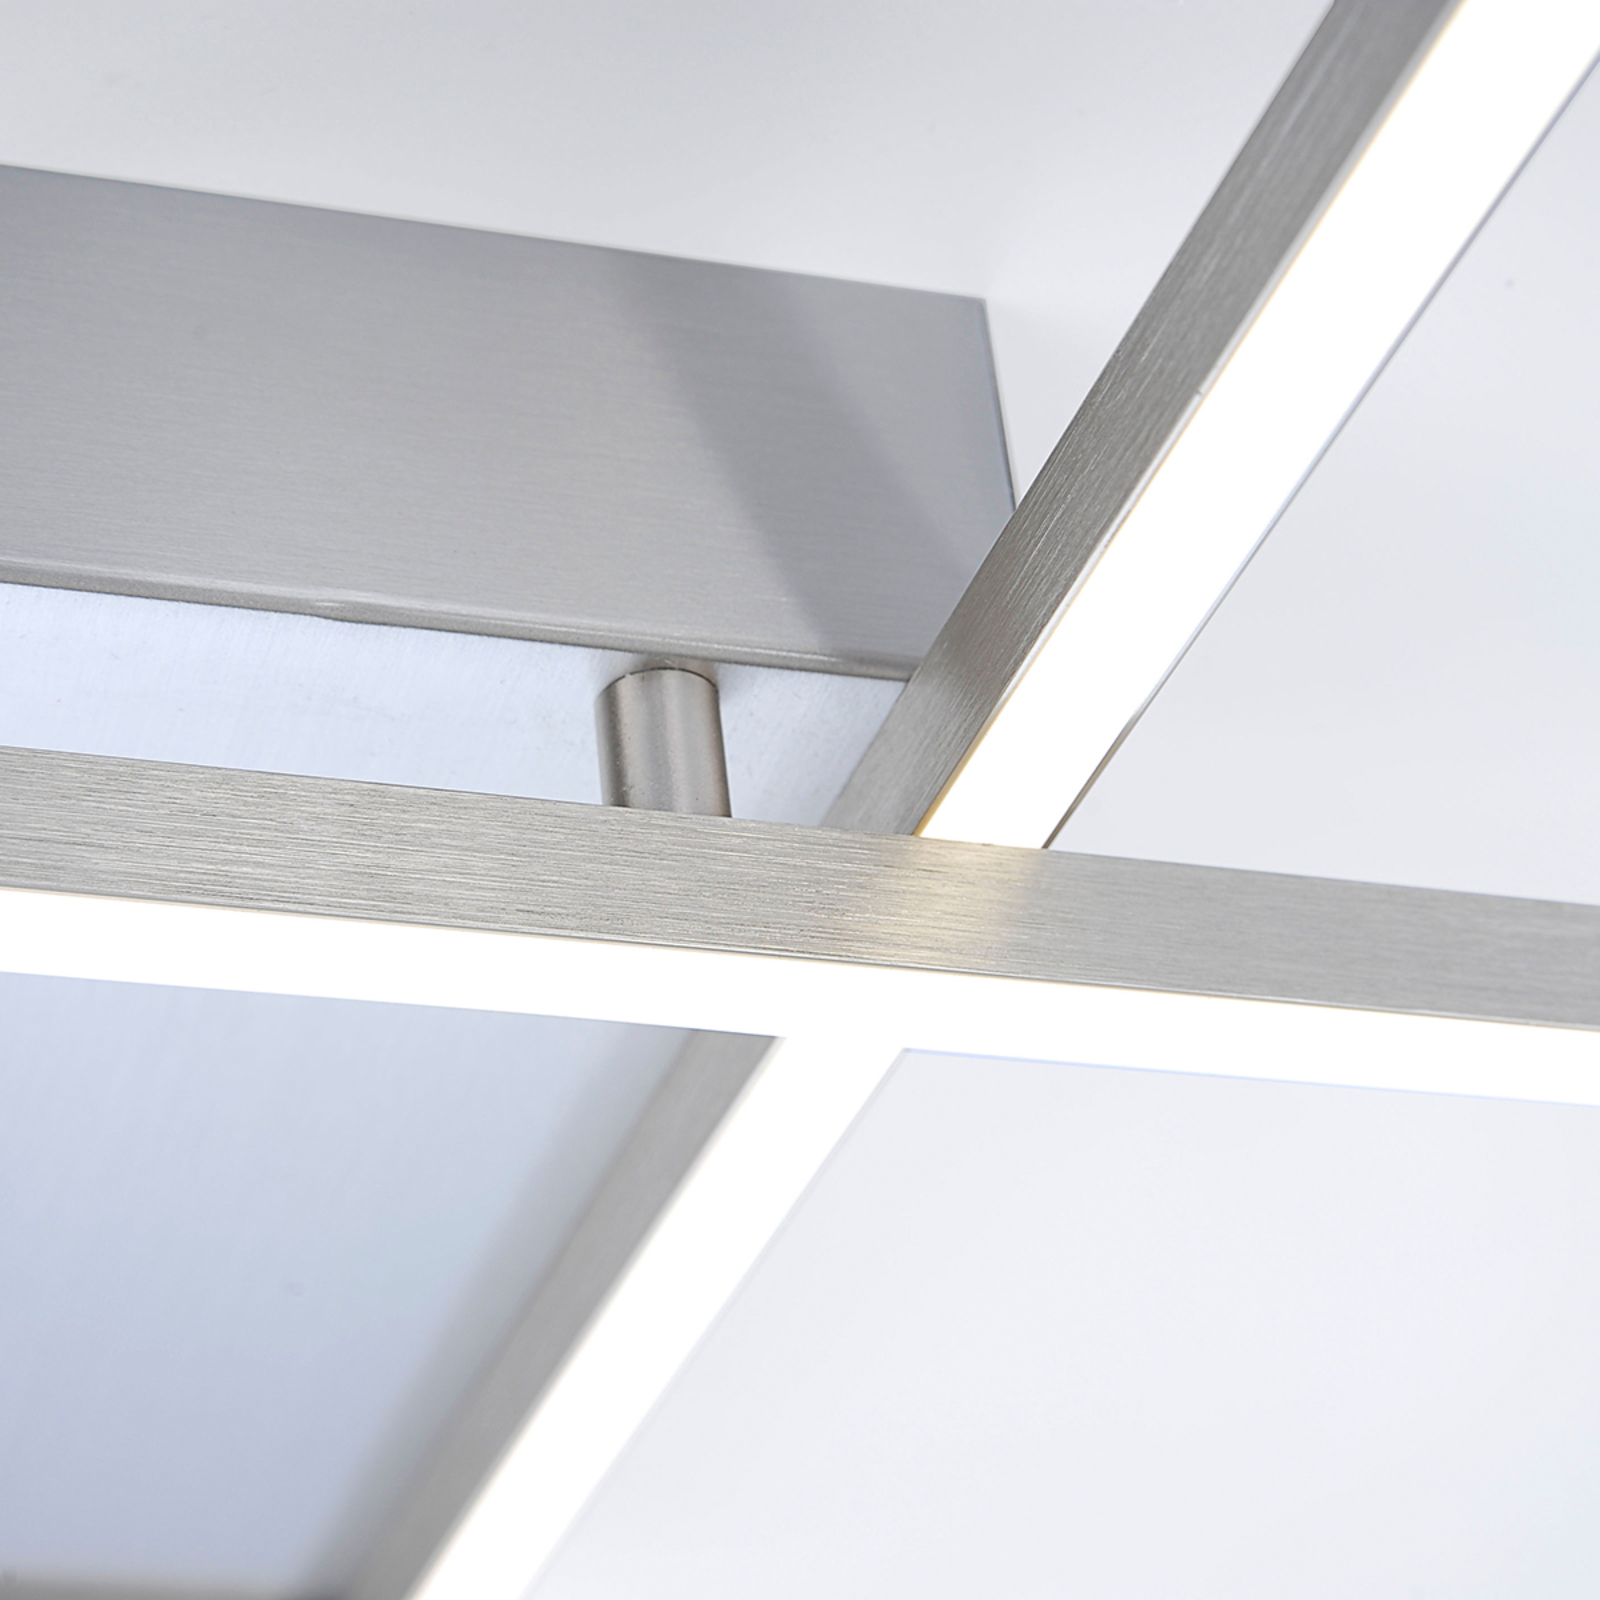 Inigo - LED plafondlamp met afstandsbed. 68 cm